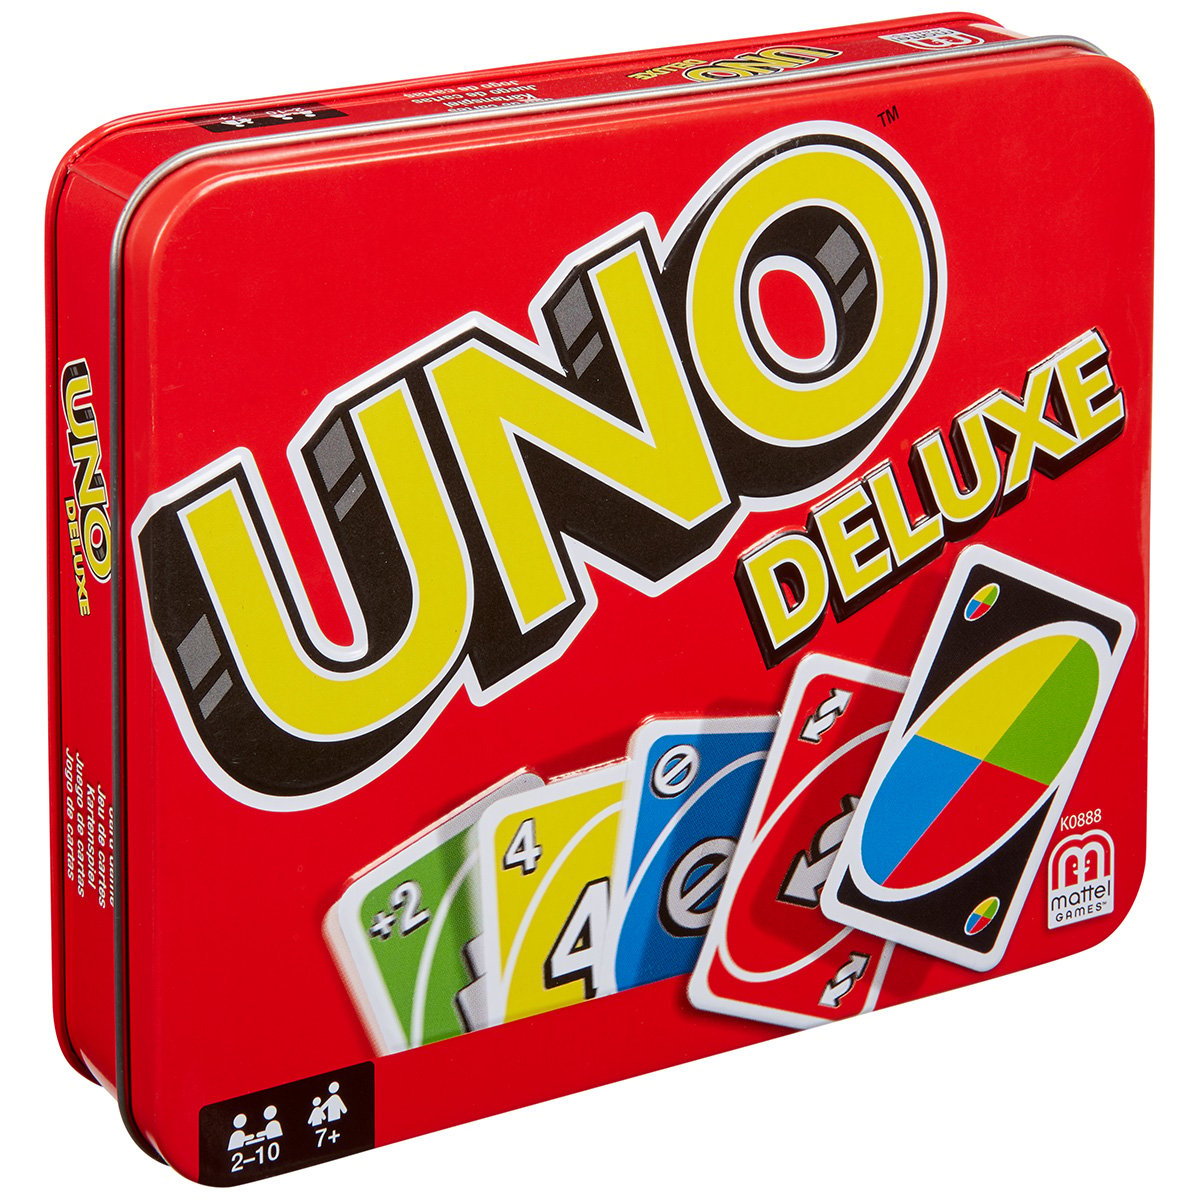 Joc de carti Uno Deluxe